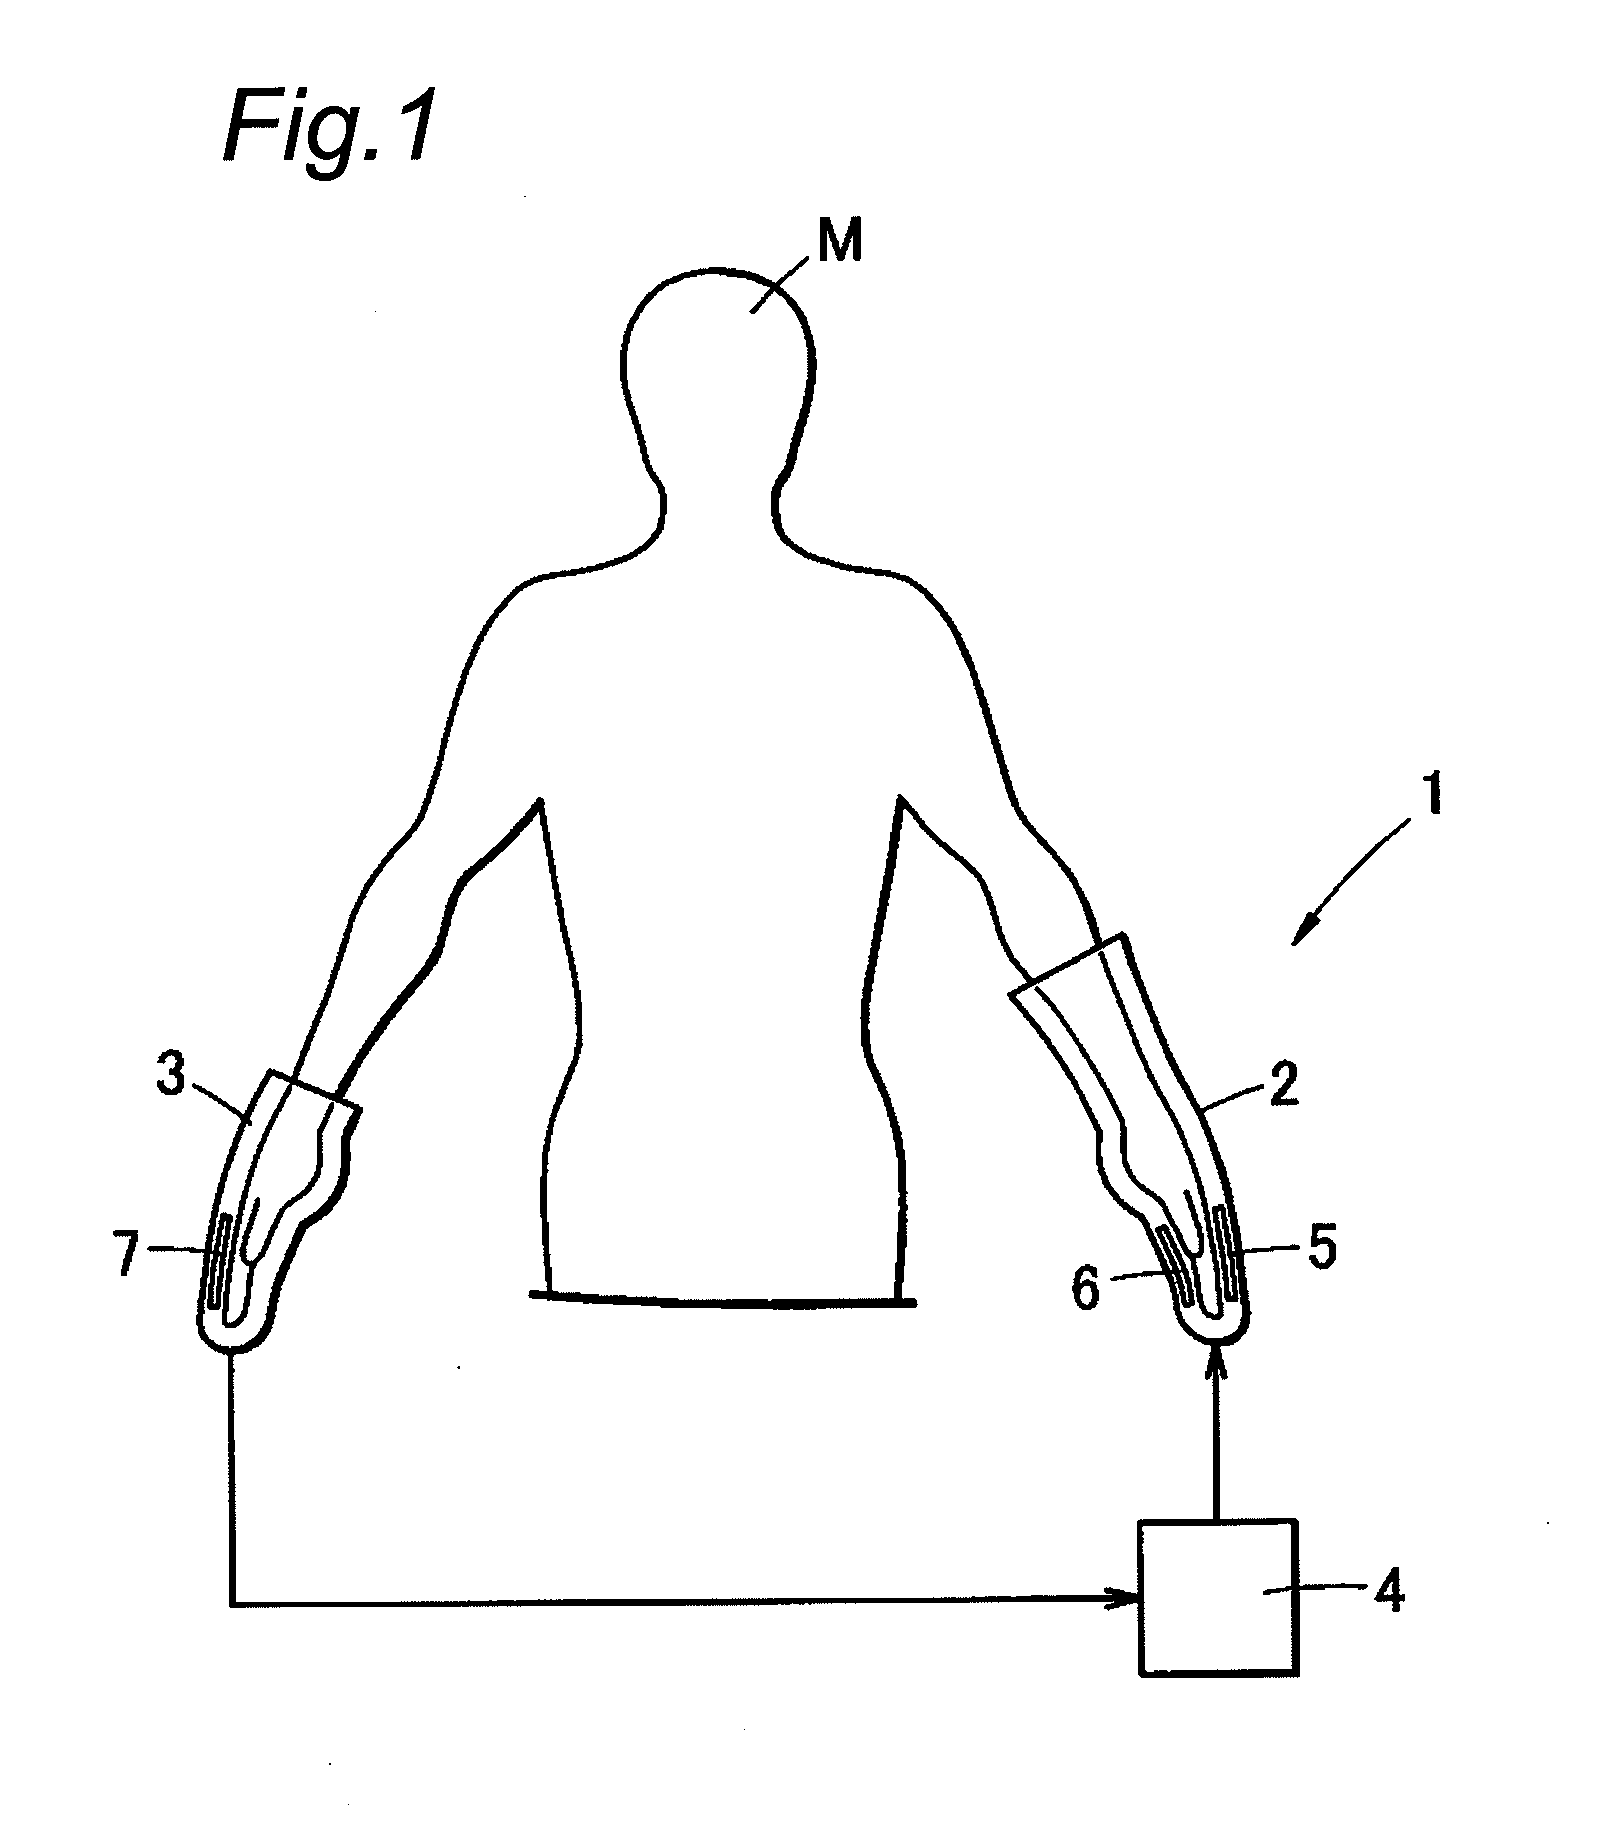 Motion assist apparatus